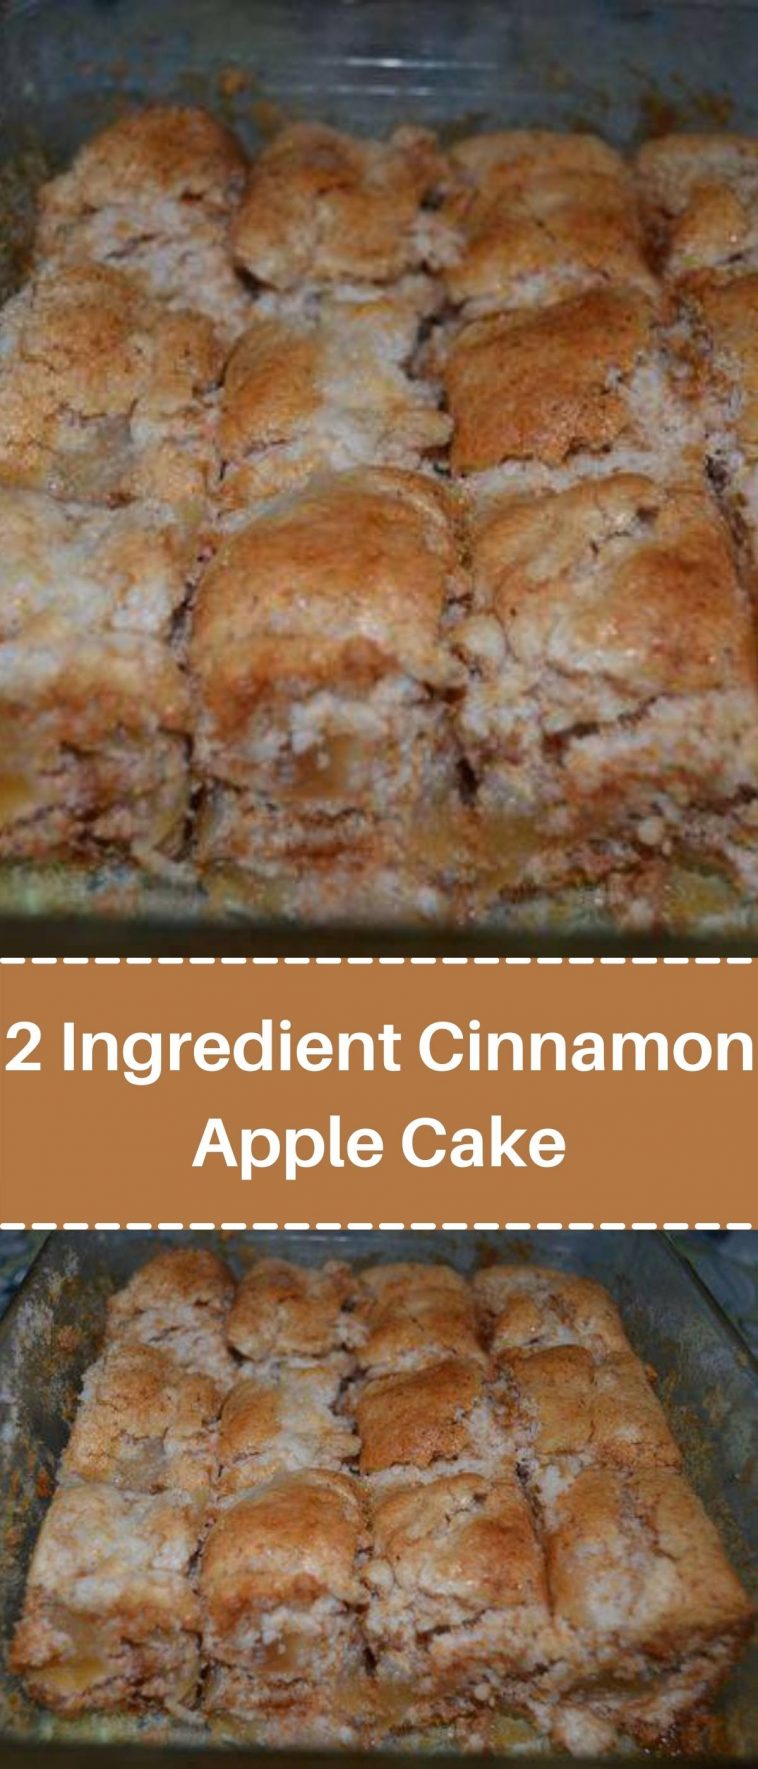 2 Ingredient Cinnamon Apple Cake